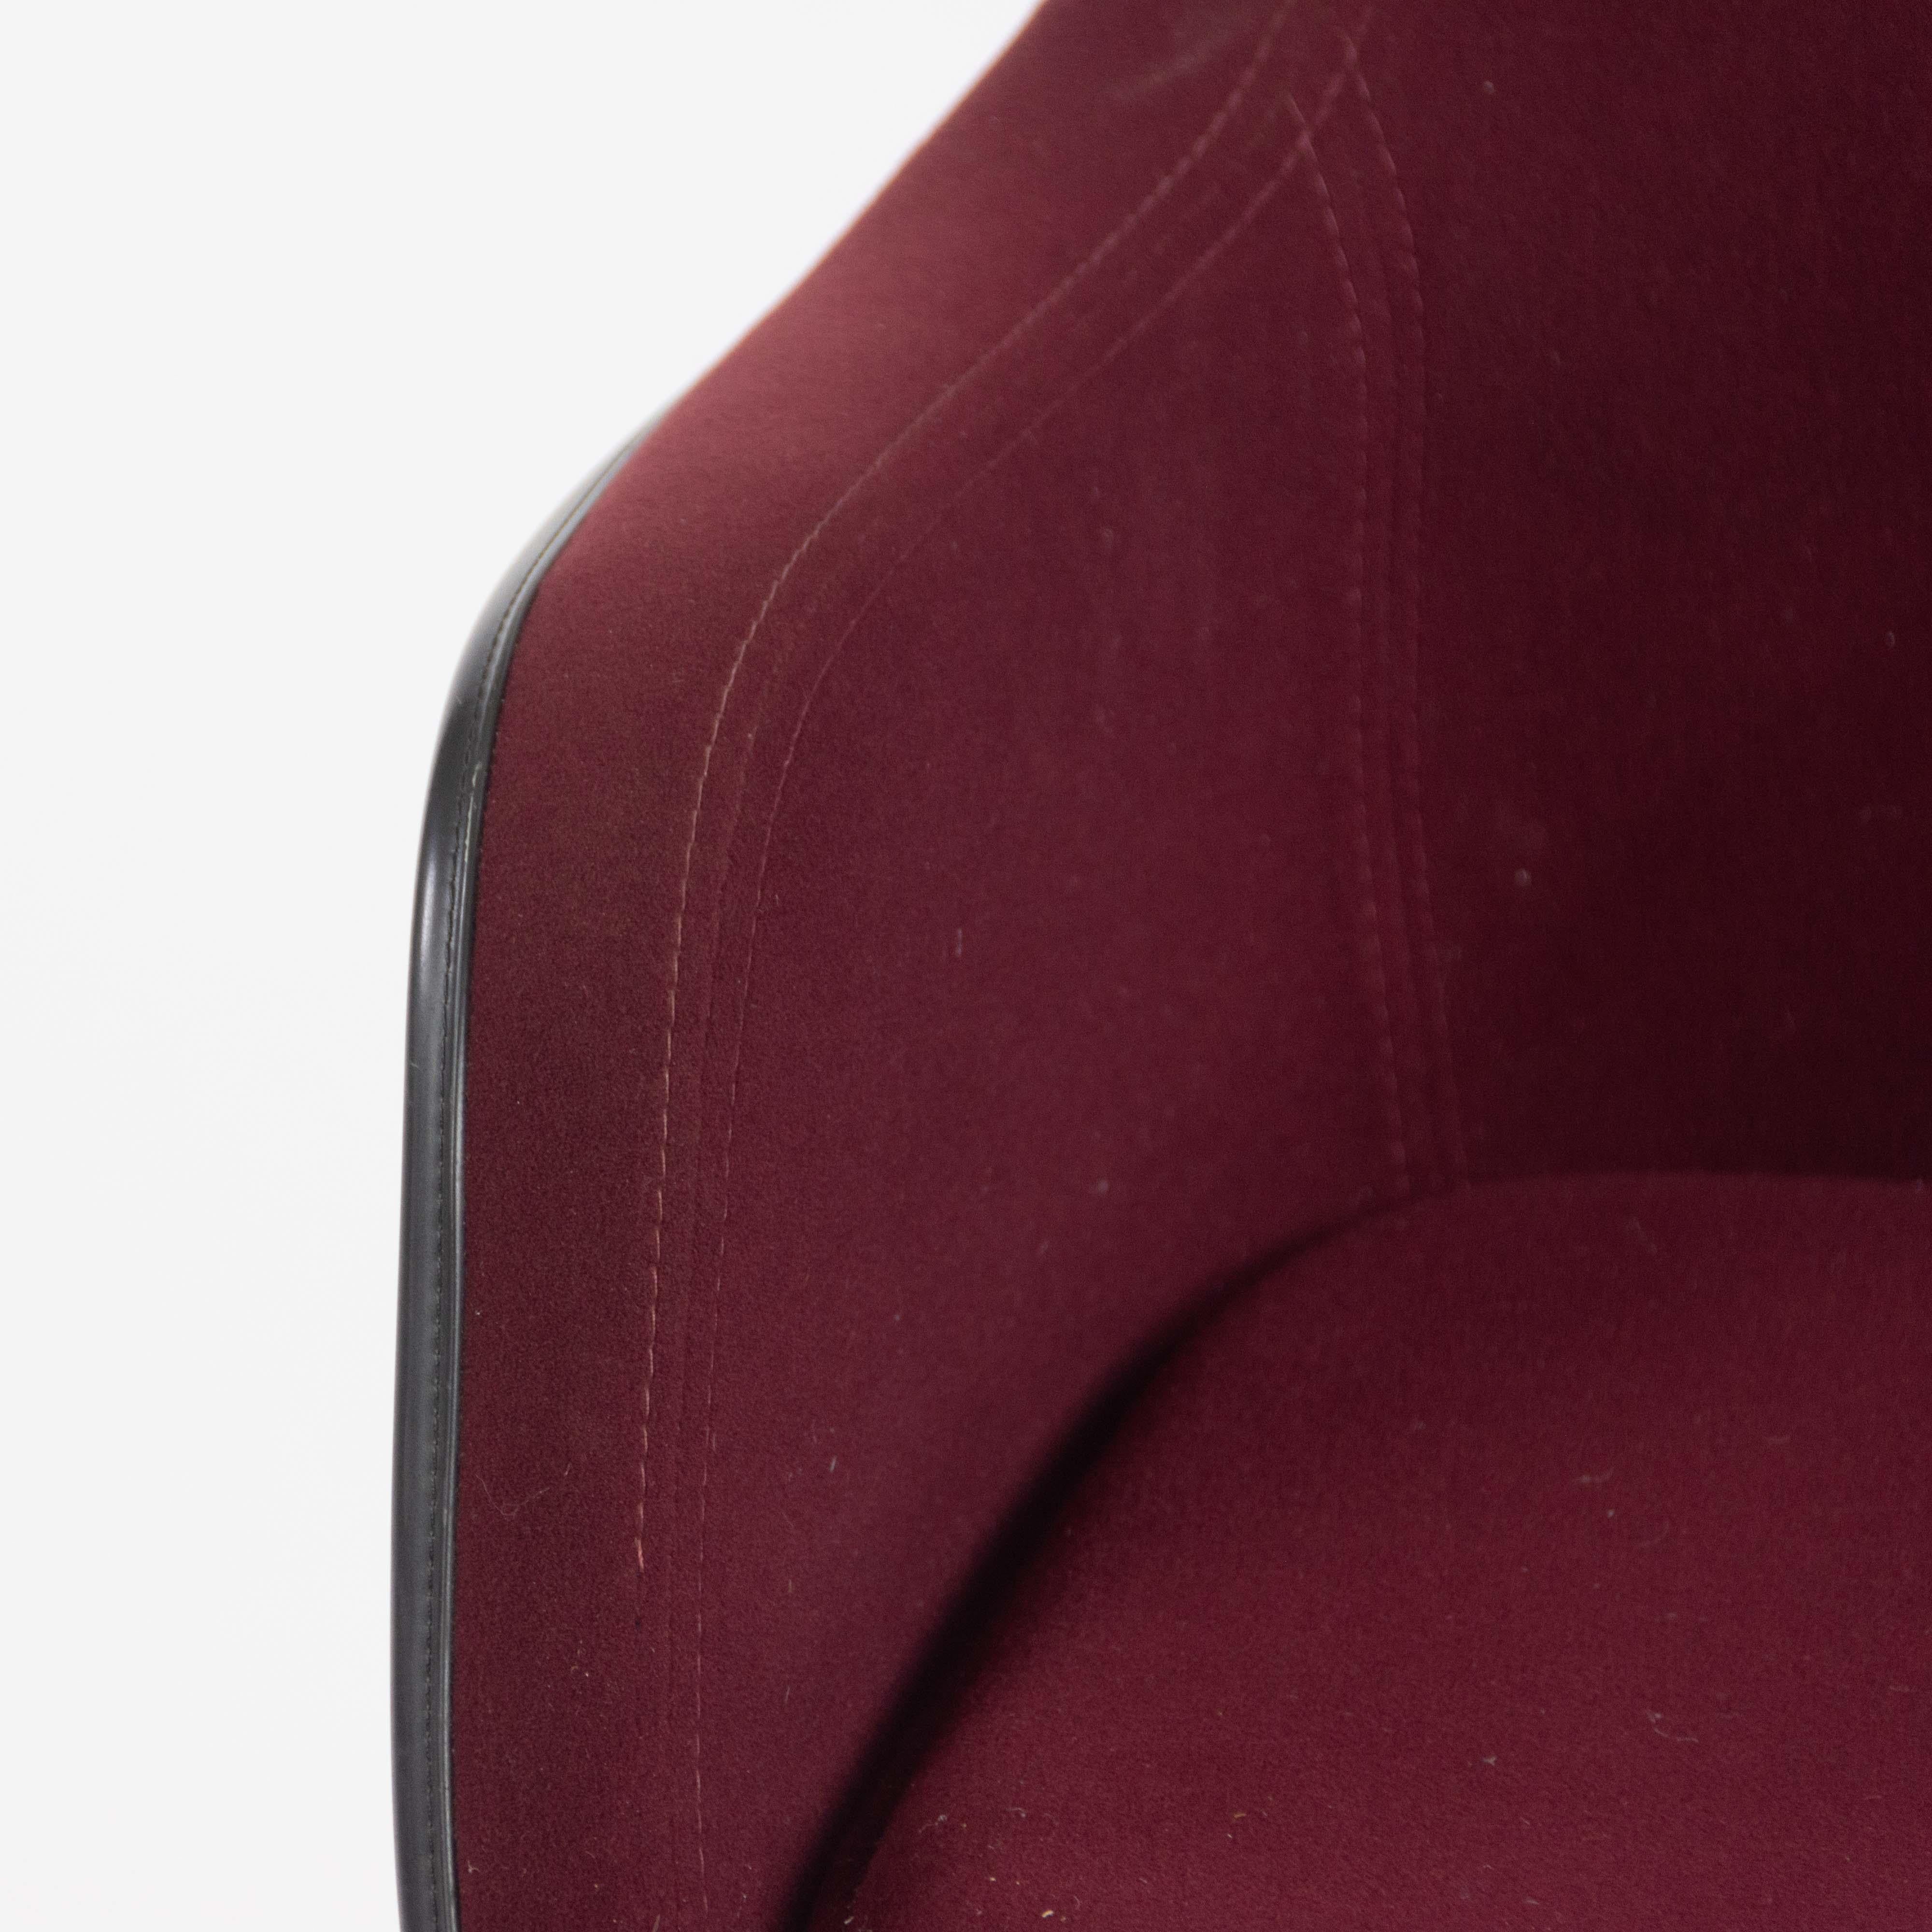 1985 Eames Herman Miller EC175 Upholstered Fiberglass Shell Chair Museum Quality For Sale 4